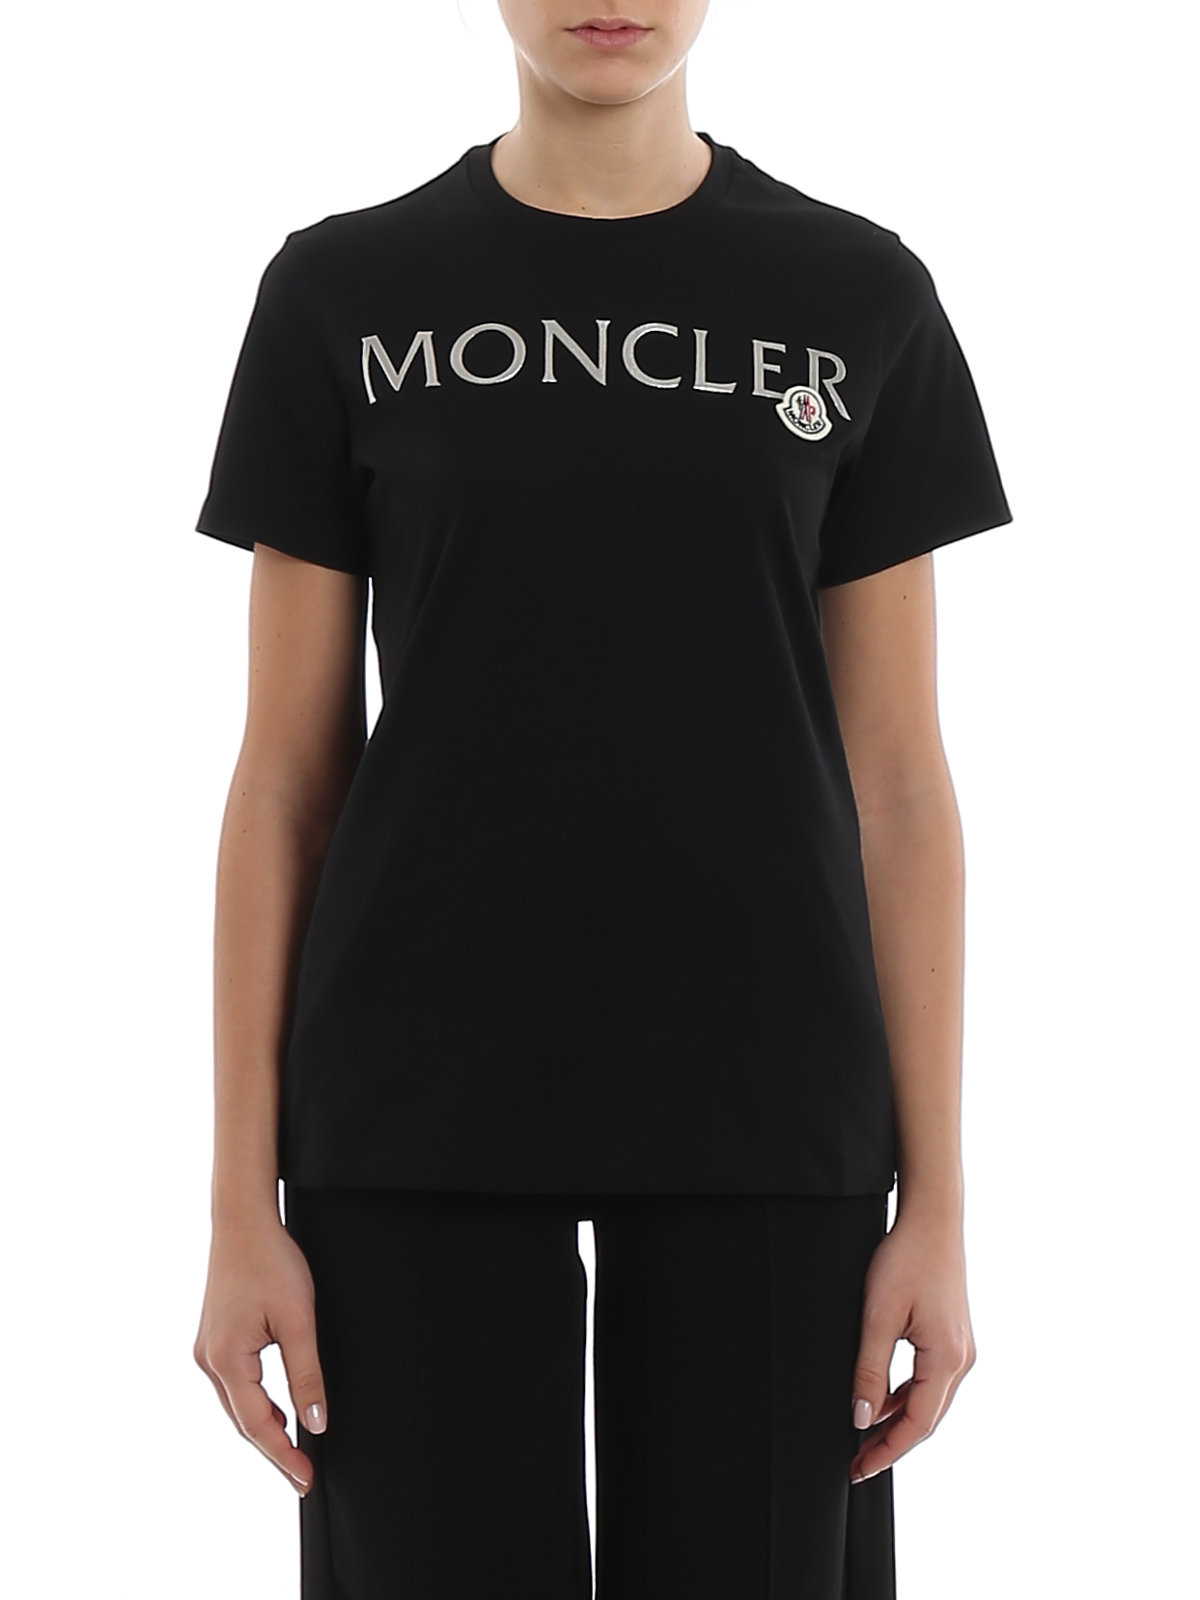 Tシャツ Moncler - Tシャツ - 黒 - 8C71510V8094999